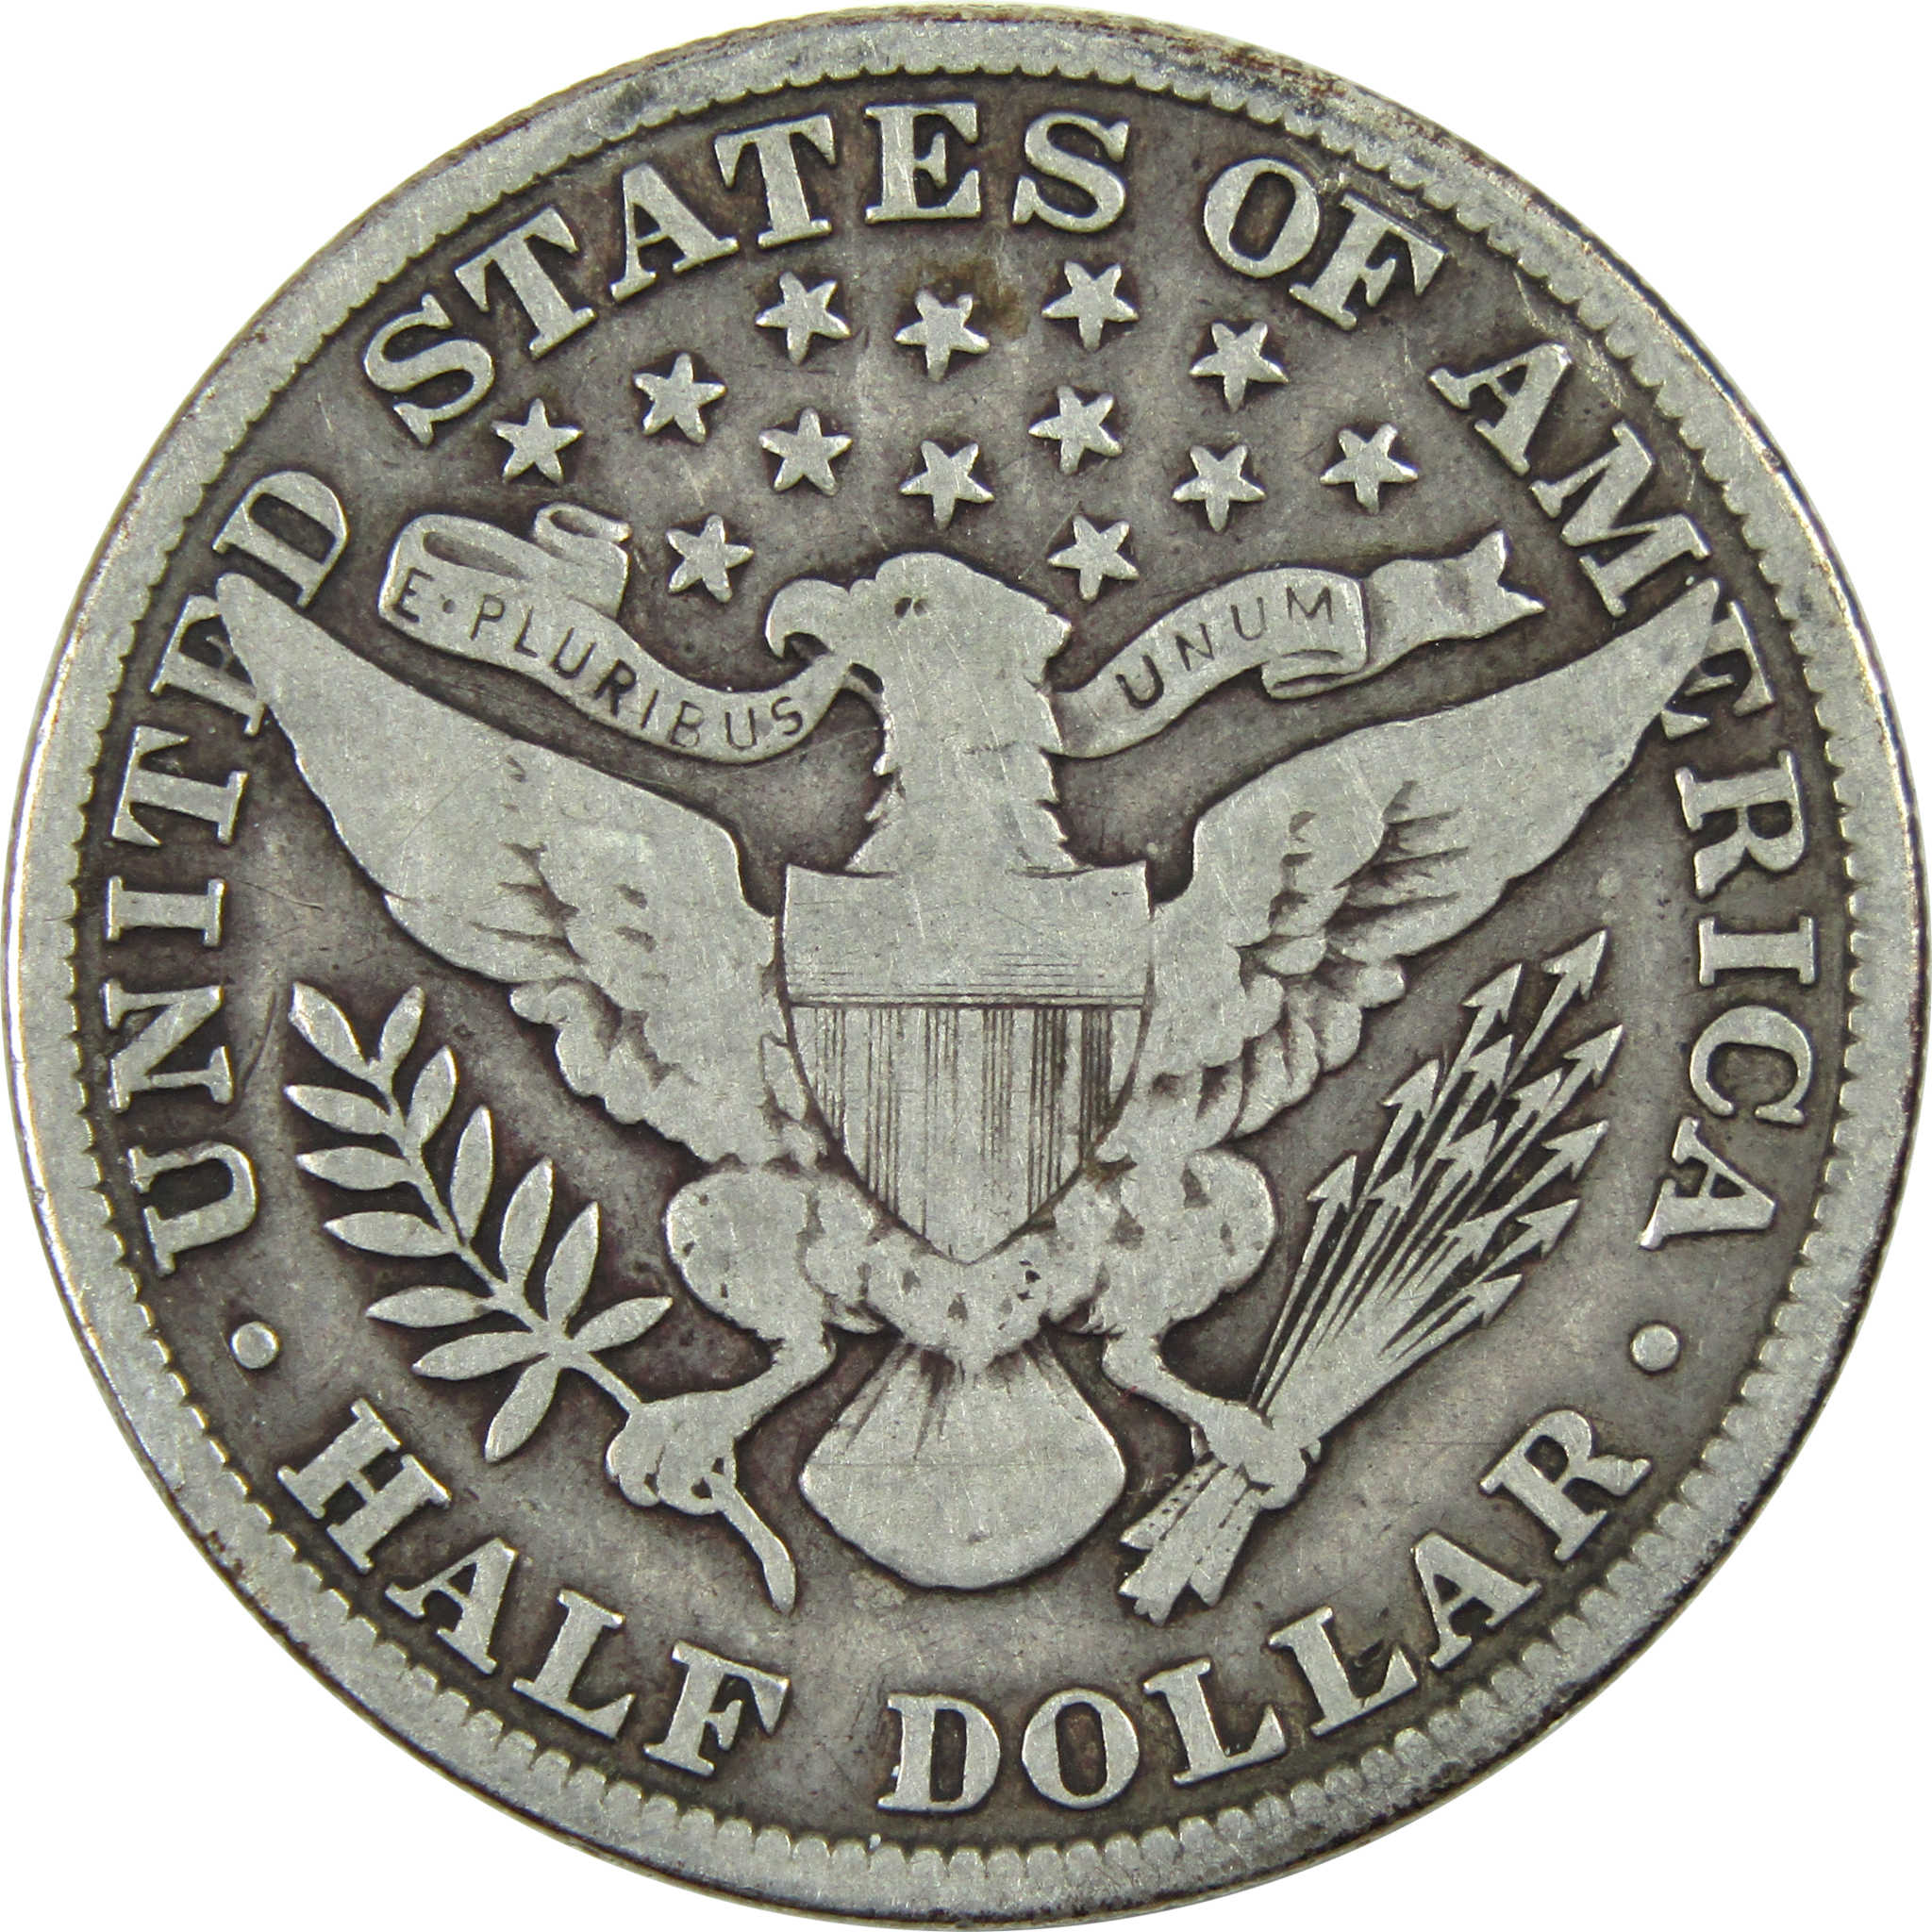 1909 Barber Half Dollar F Fine Silver 50c Coin SKU:I13309